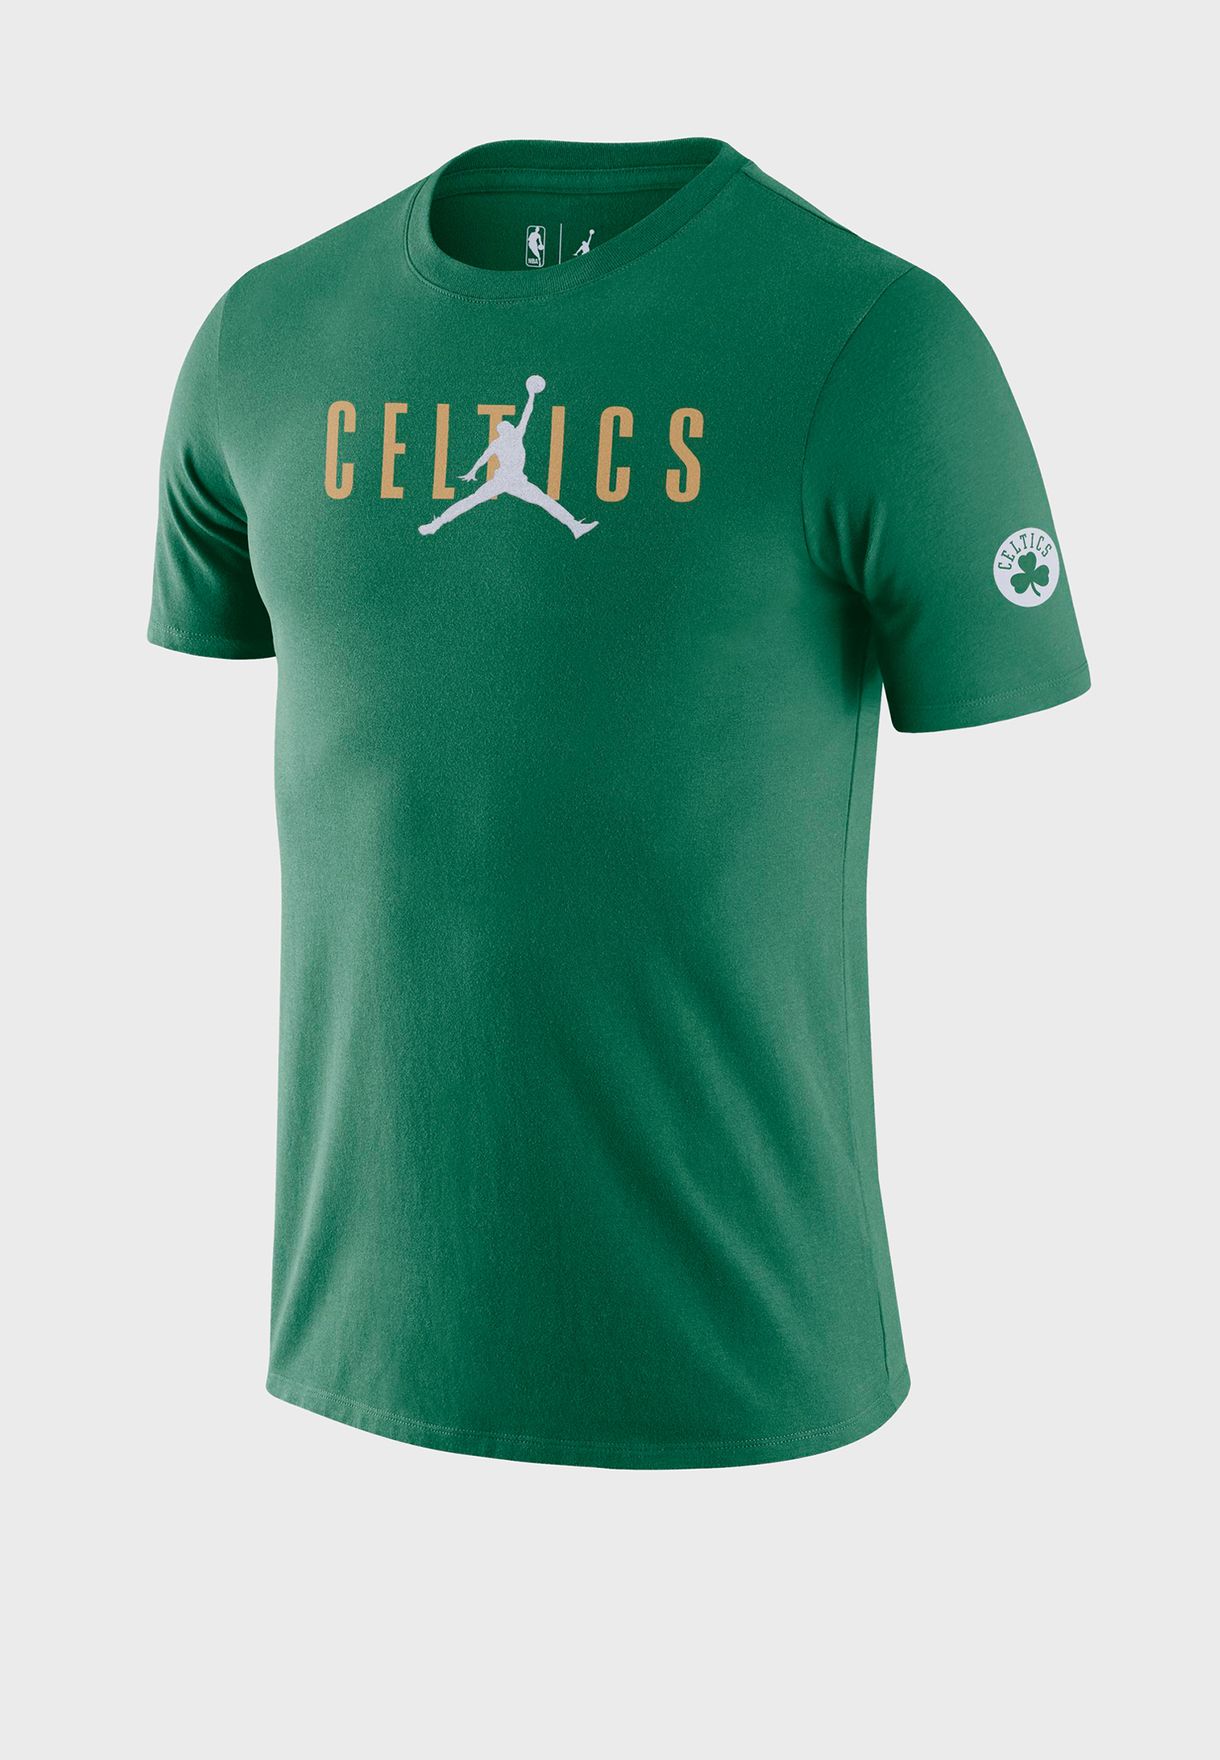 Celtics Statement T-Shirt